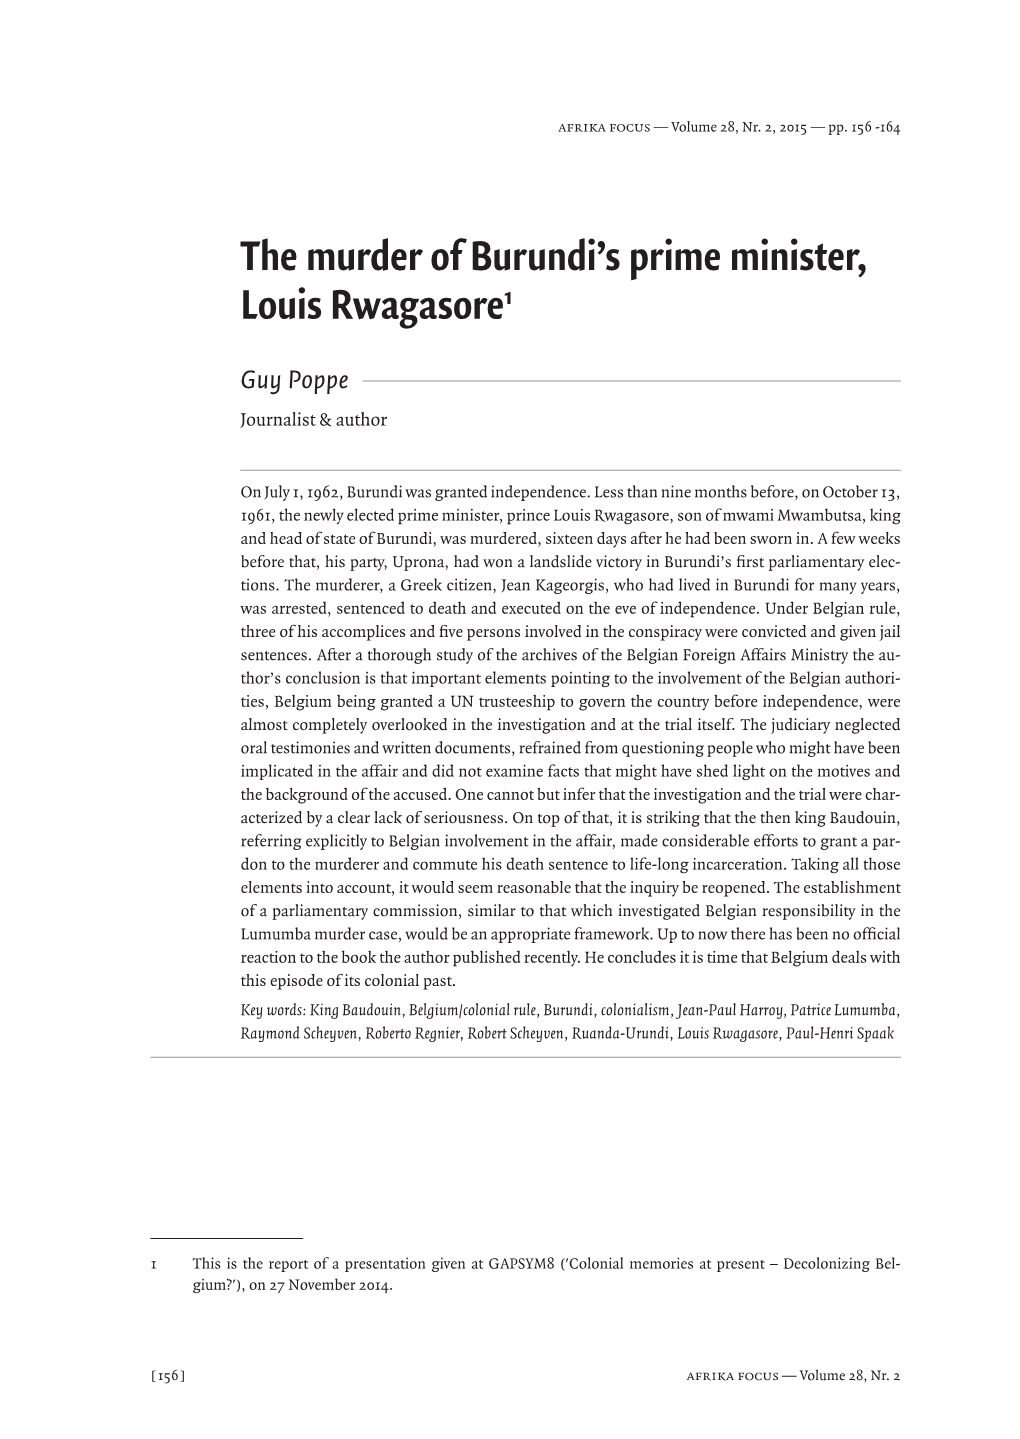 The Murder of Burundi's Prime Minister, Louis Rwagasore1